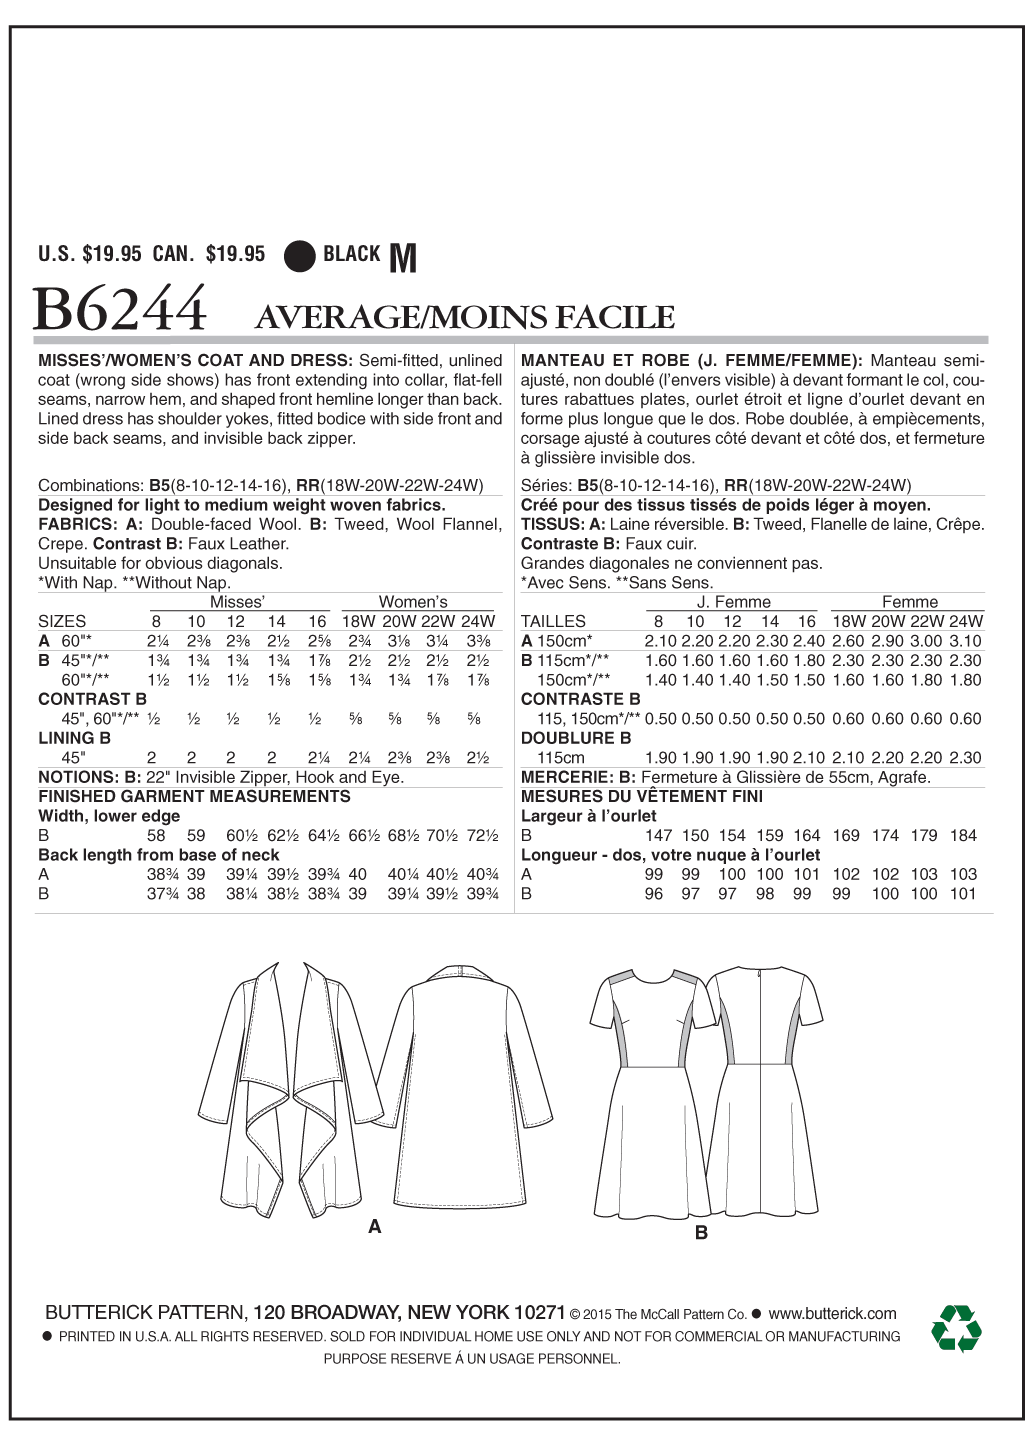 Butterick Sewing Pattern B6244 Misses'/Women's Lisette Coat and Dress